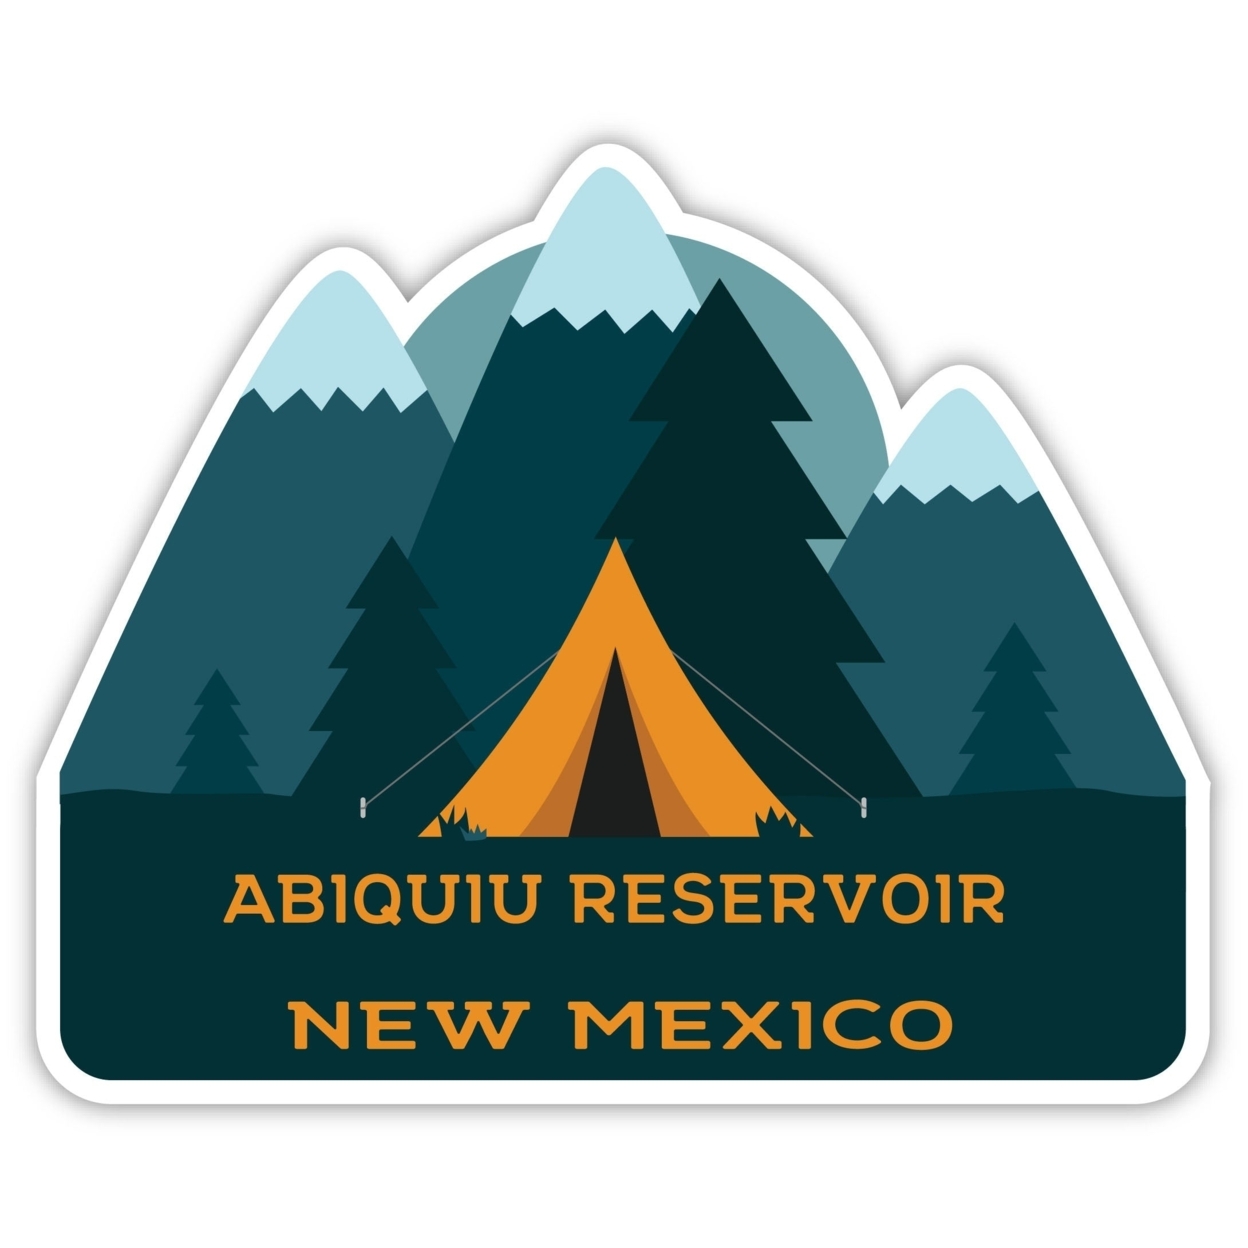 Abiquiu Reservoir New Mexico Souvenir Decorative Stickers (Choose Theme And Size) - 4-Pack, 12-Inch, Tent